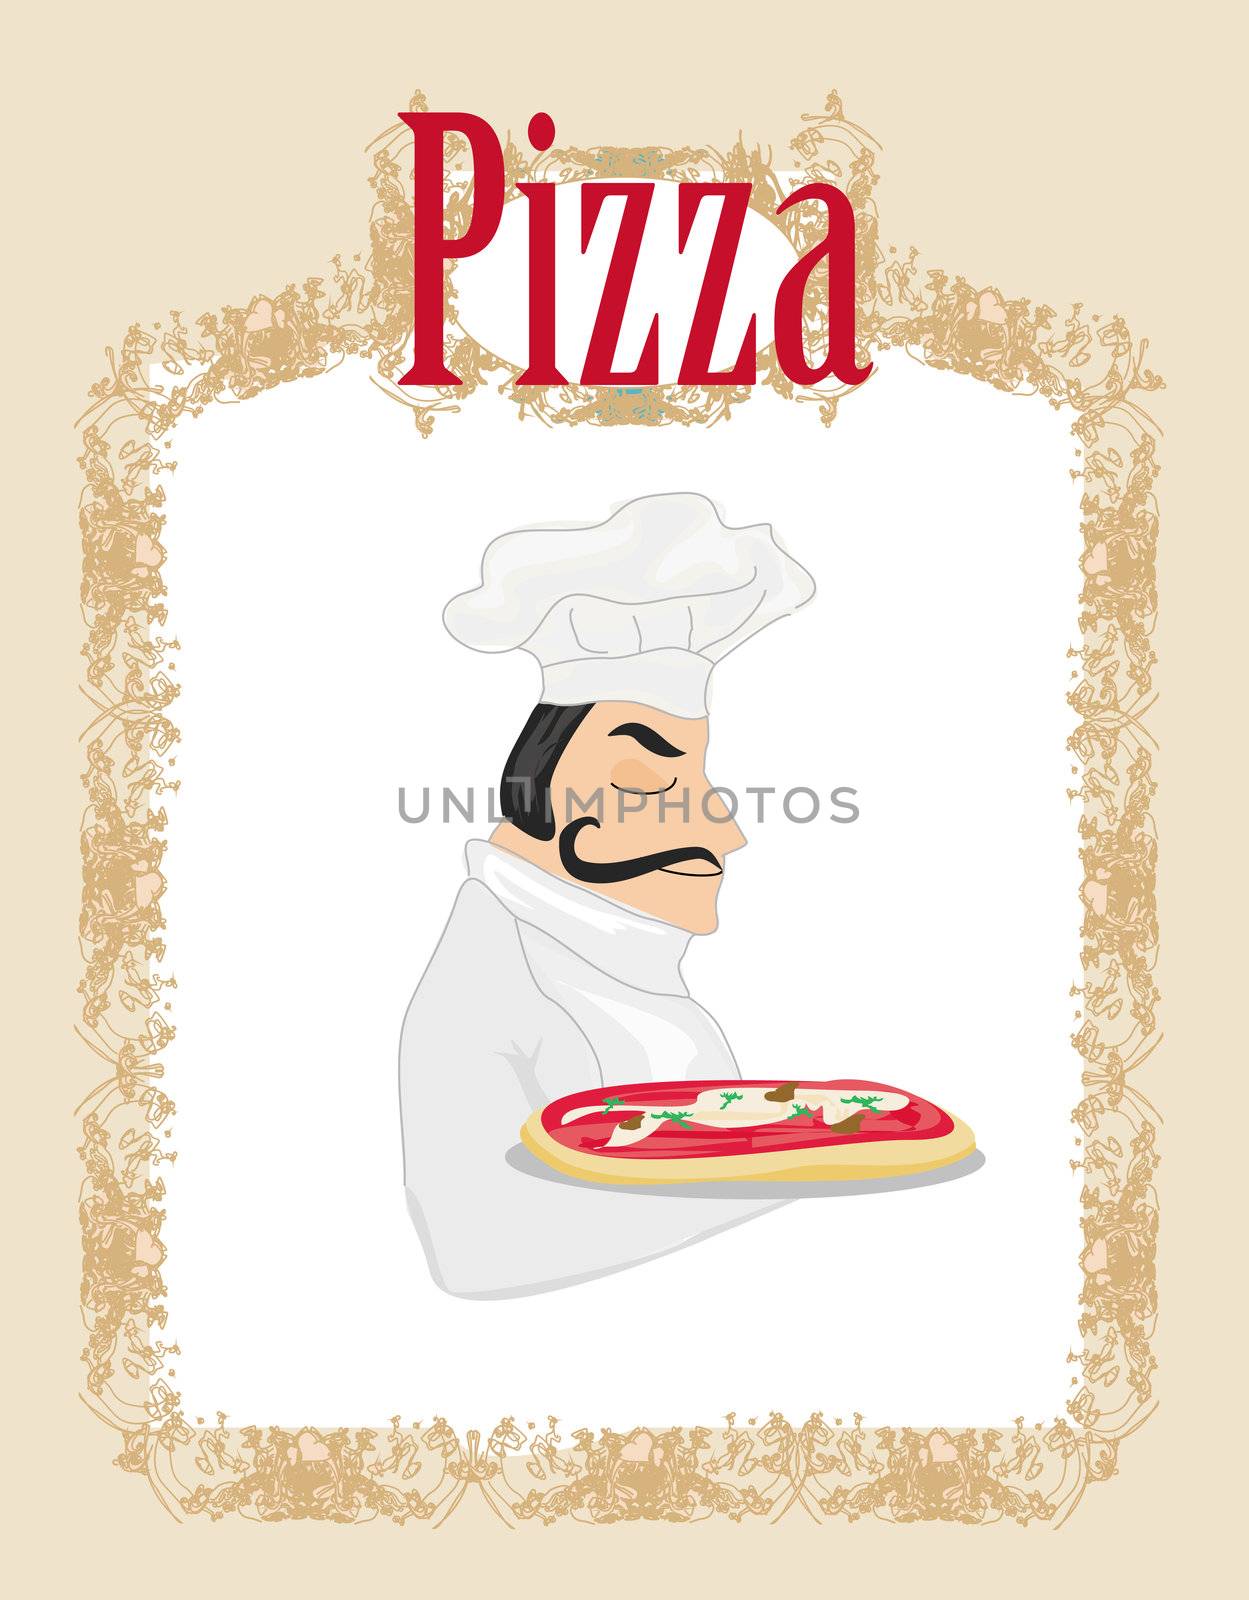 Pizza Menu Template by JackyBrown